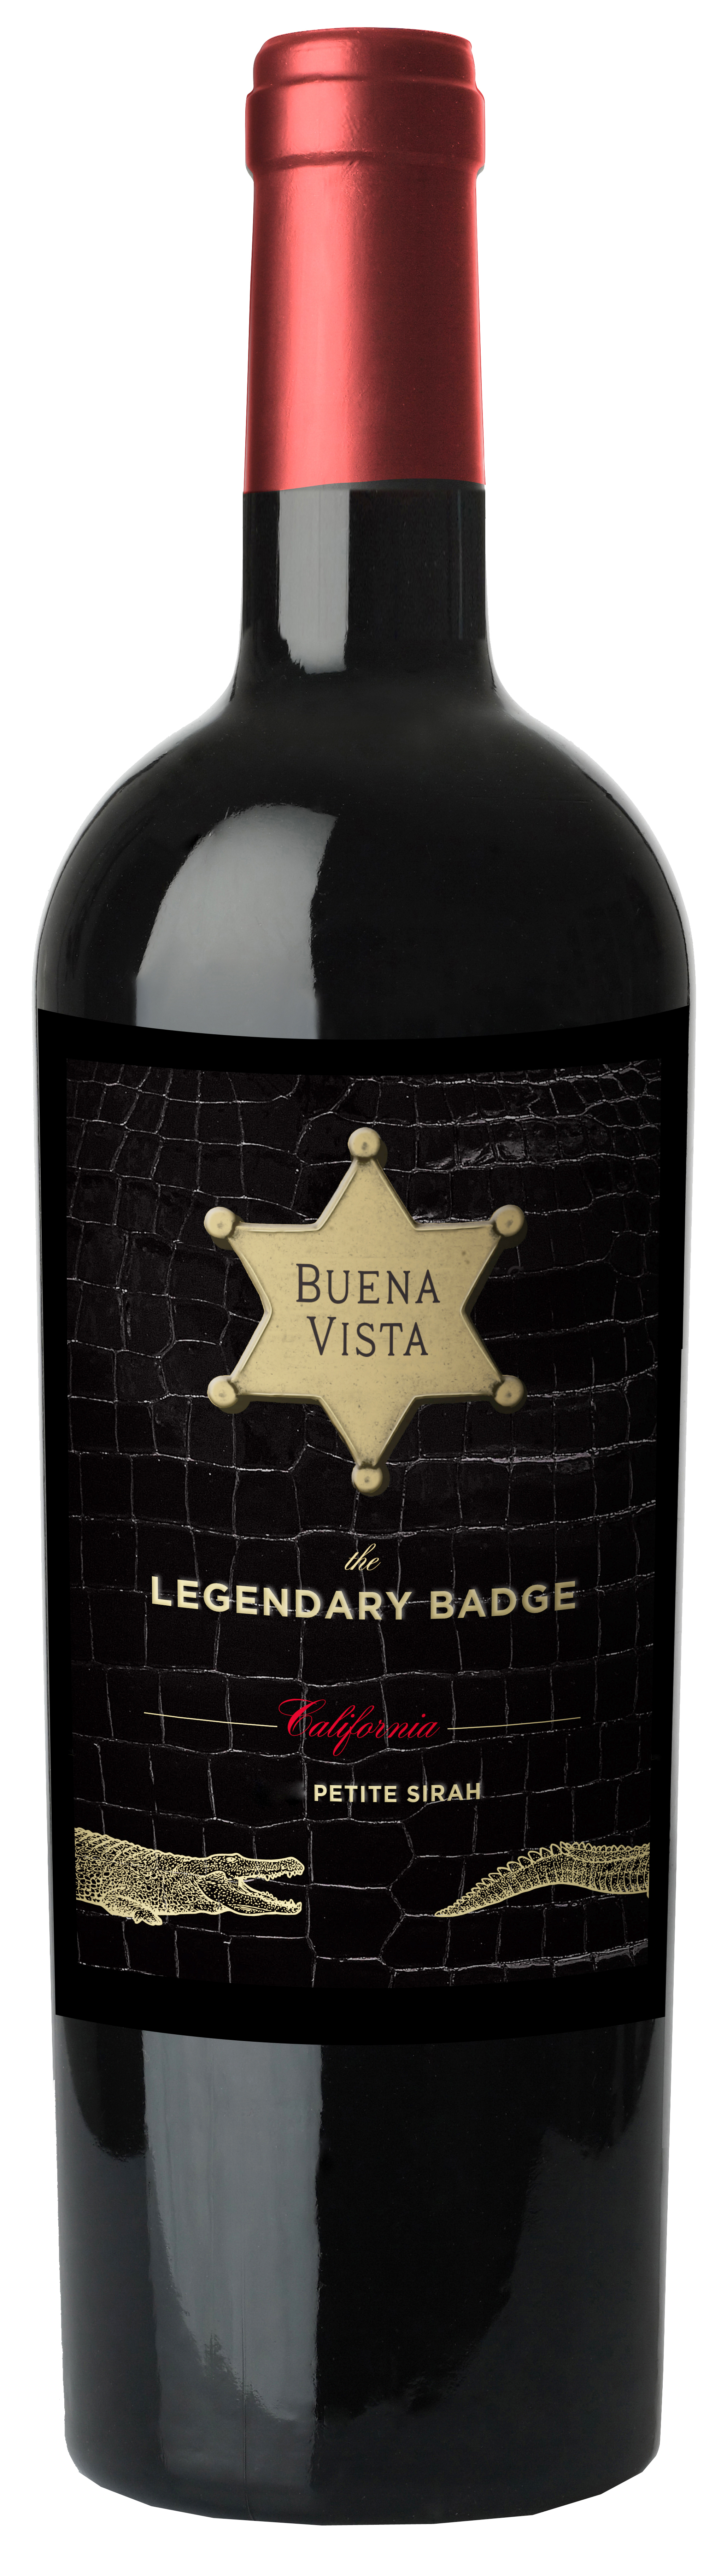 71073 Buena Vista The Legendary Badge Petit Syrah 0,75 liter